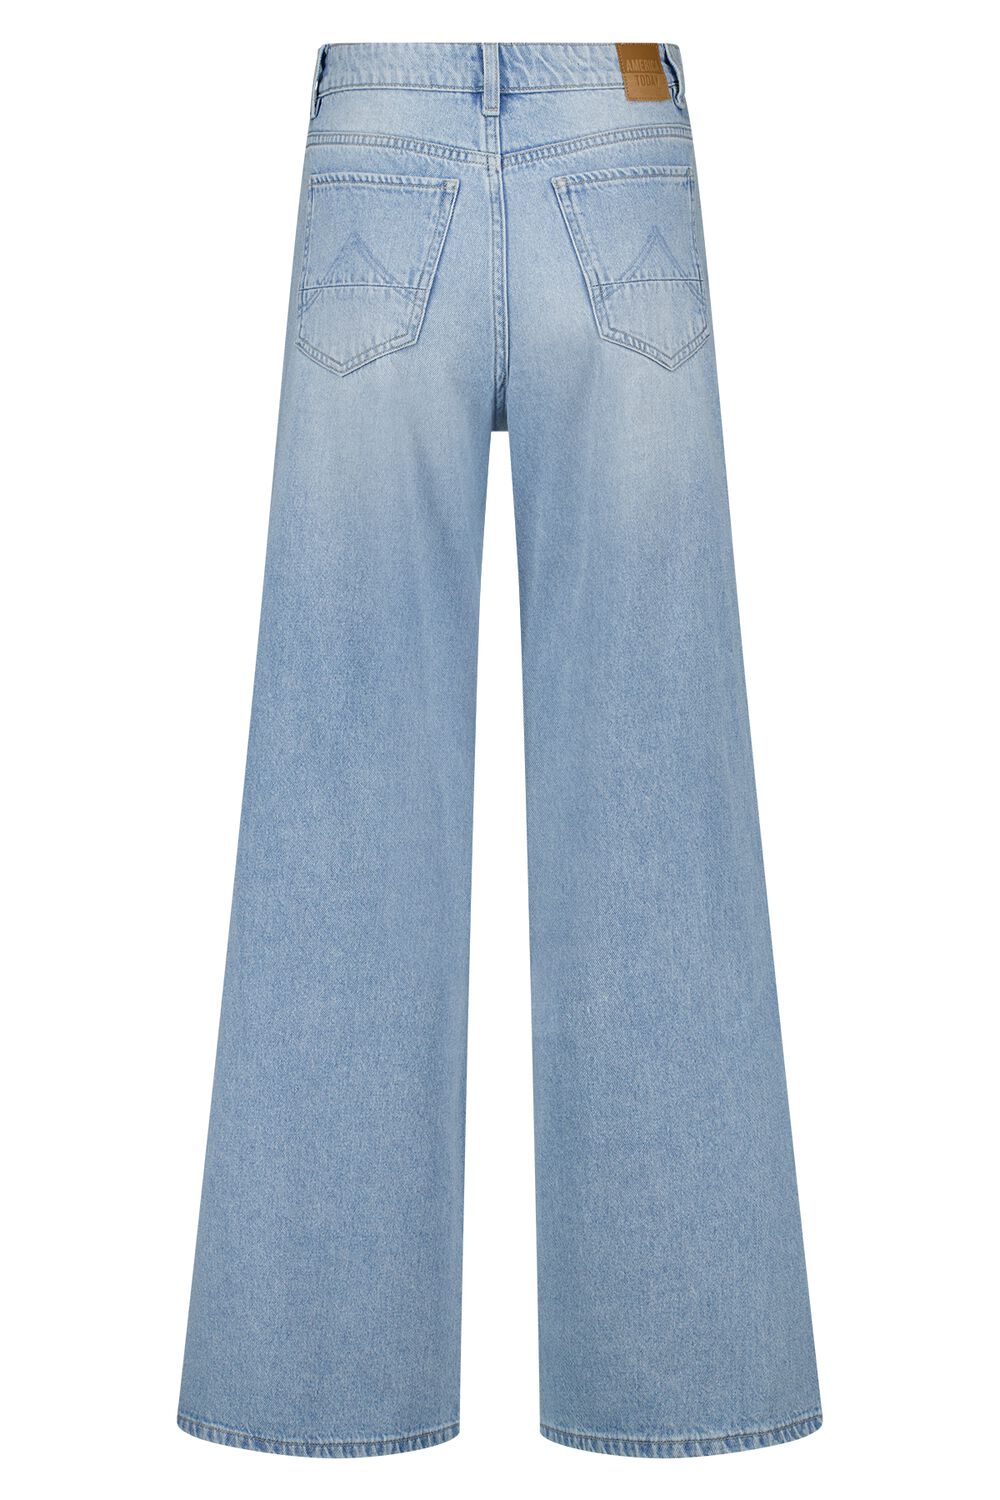 America Today Dames Jeans Virginia Blauw